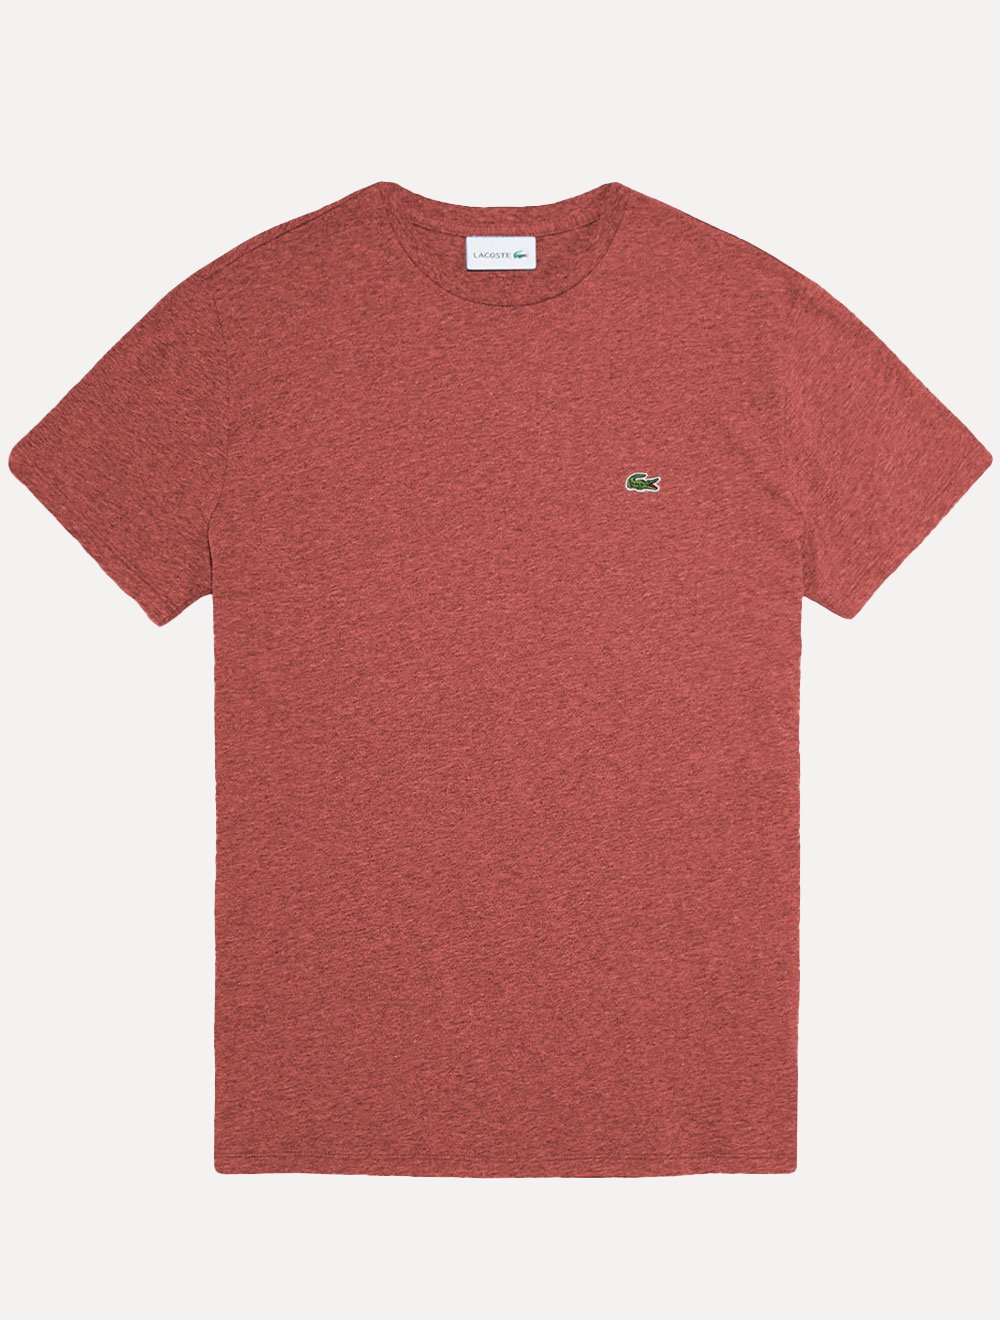 Camiseta Lacoste Masculina Classic Pima Cotton Logo Vermelho Mescla